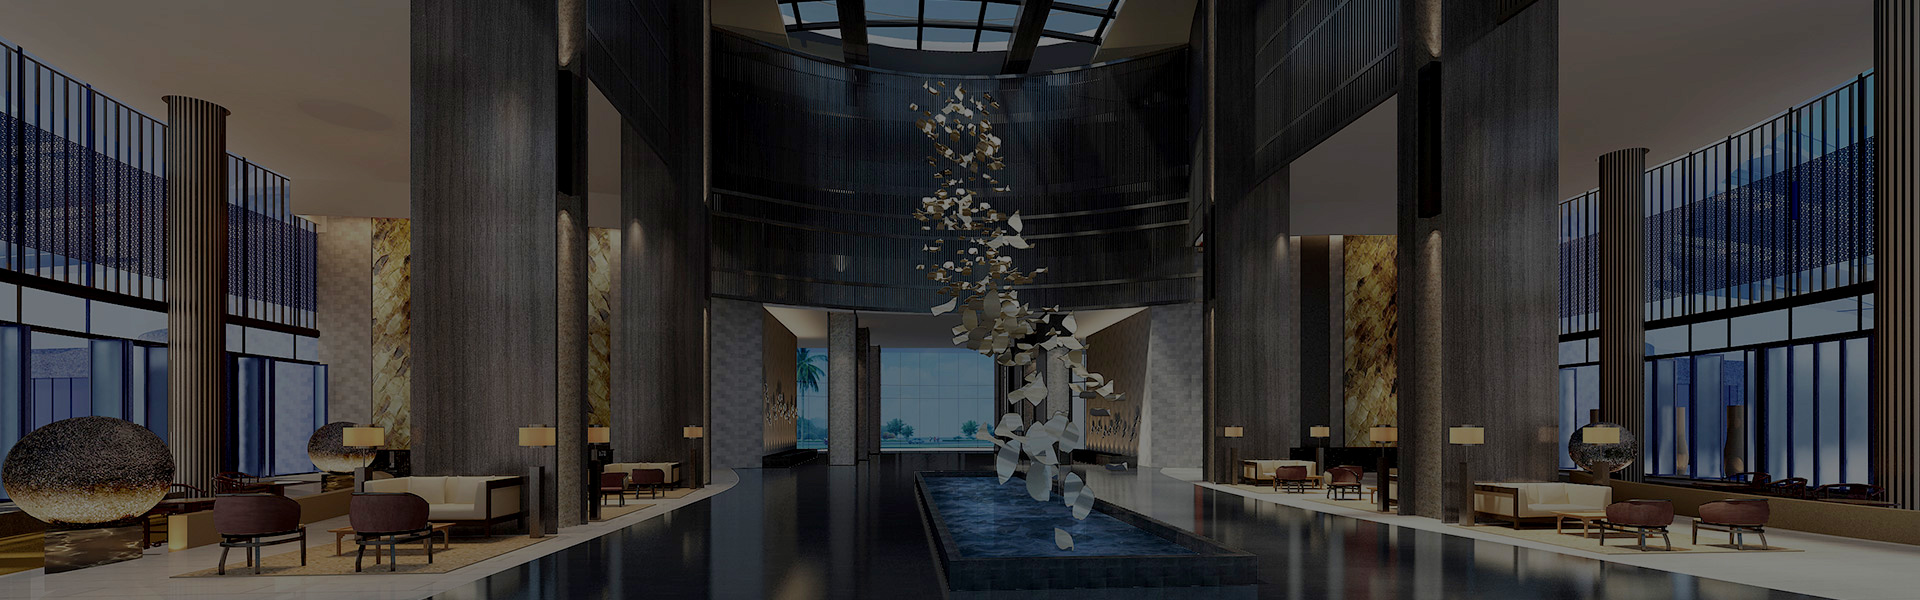 Hilton Double Tree – Sharjah,restaurant pendant lamp,wall sconce china factory,pendant lamp